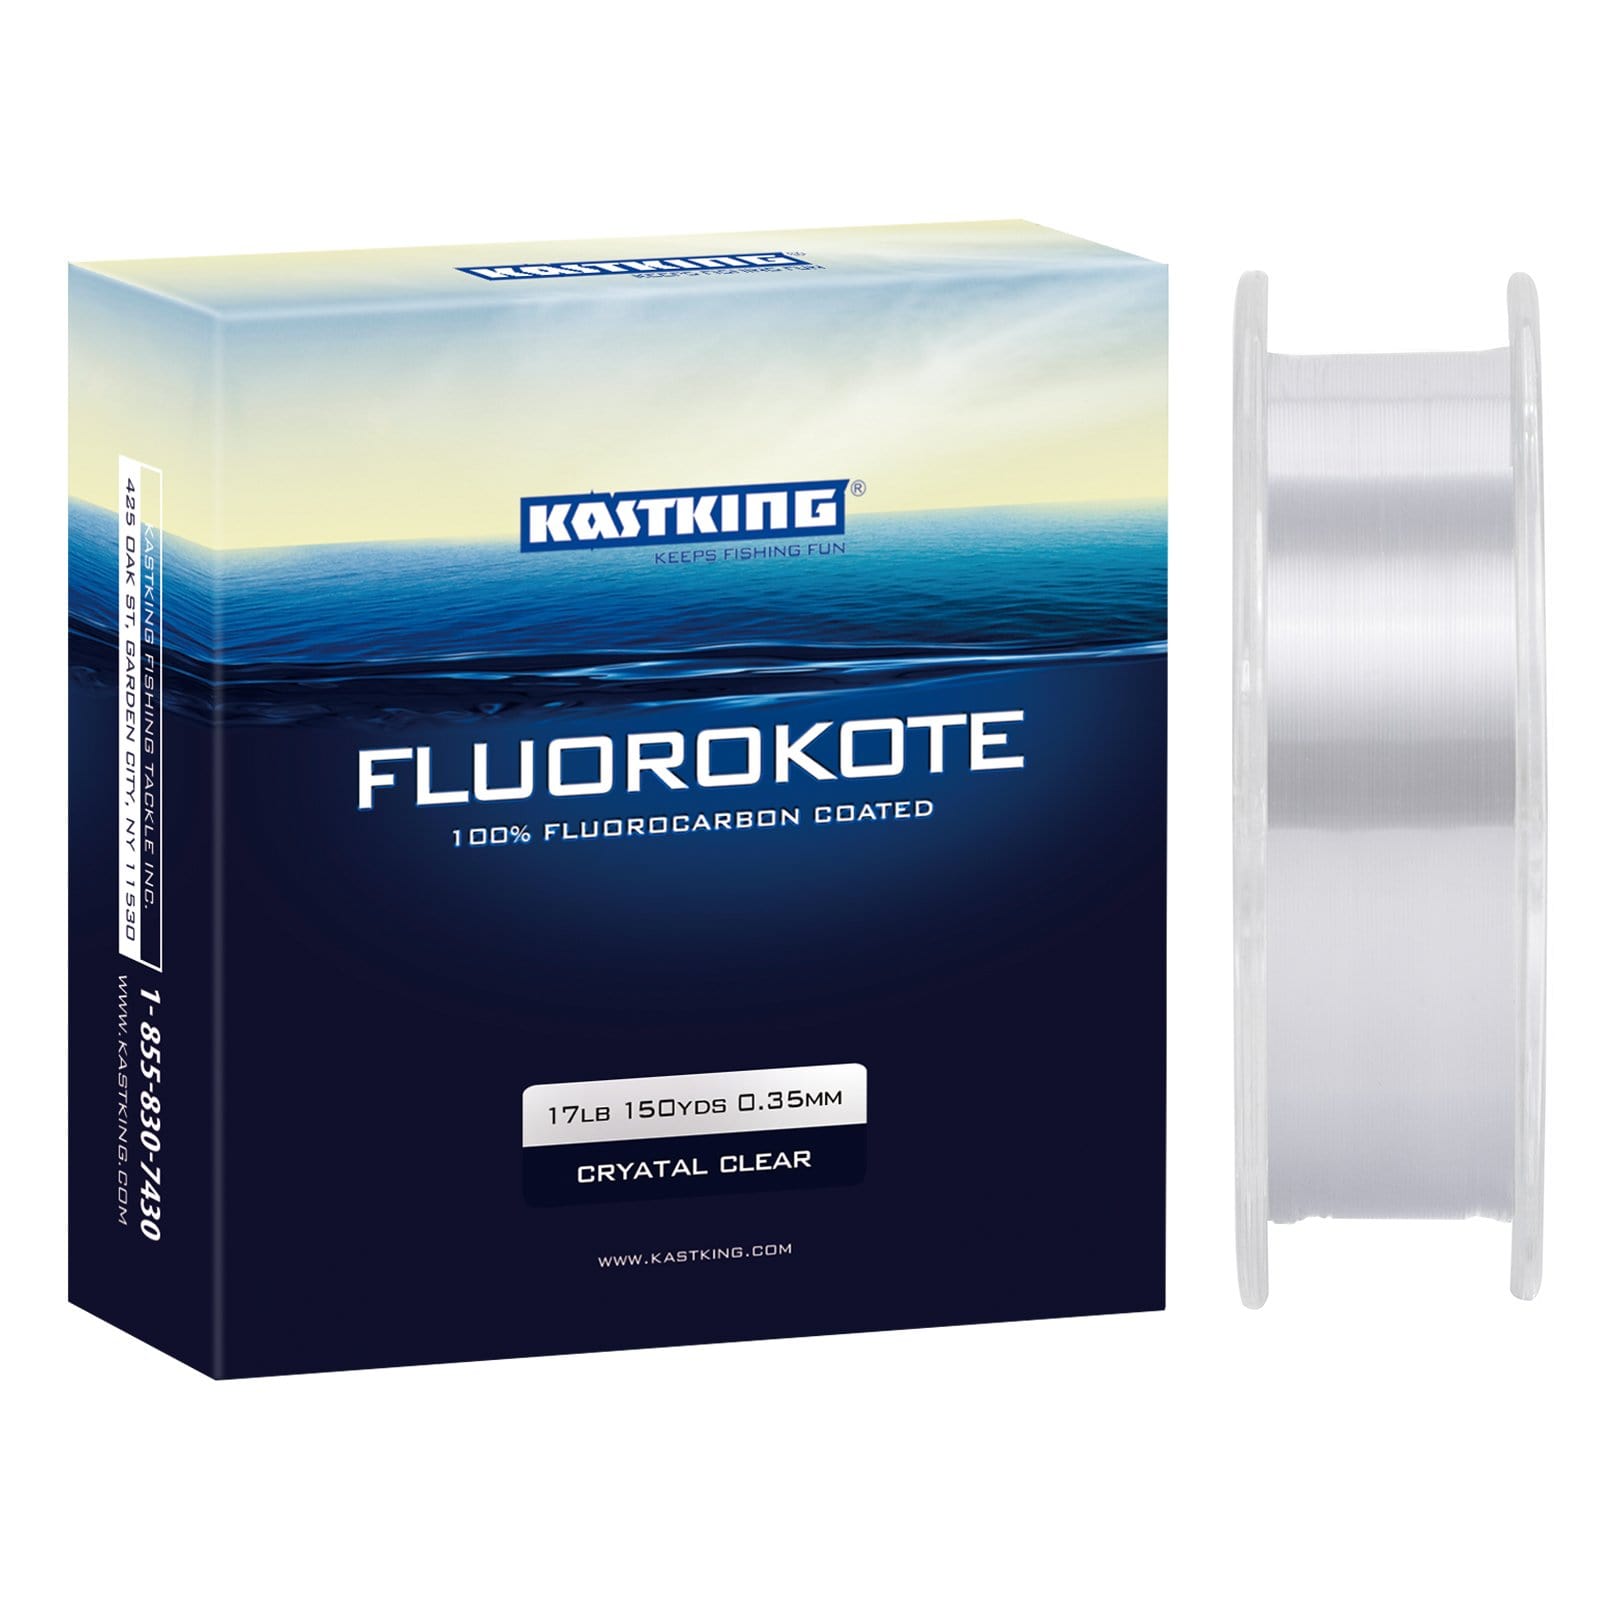 KastKing Kovert Fluorocarbon Fishing Line 200Yds Carbon Clear Line 12/15/20  lbs